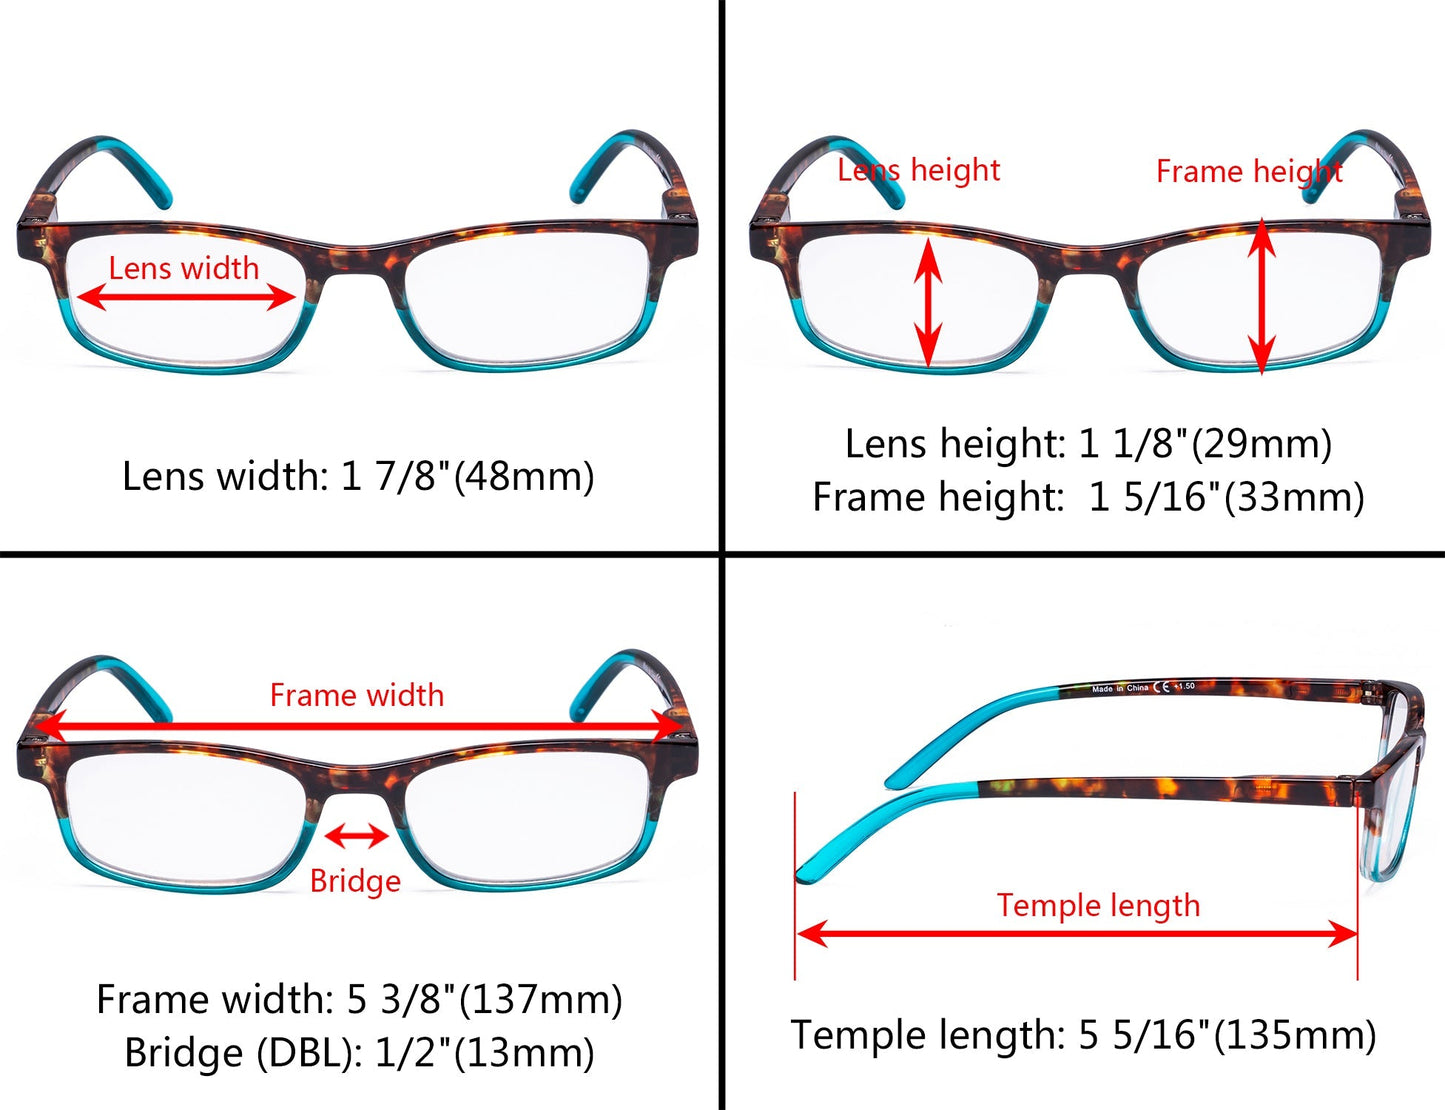 5 Pack Stylish Rectangle Reading Glasses for Women R111D